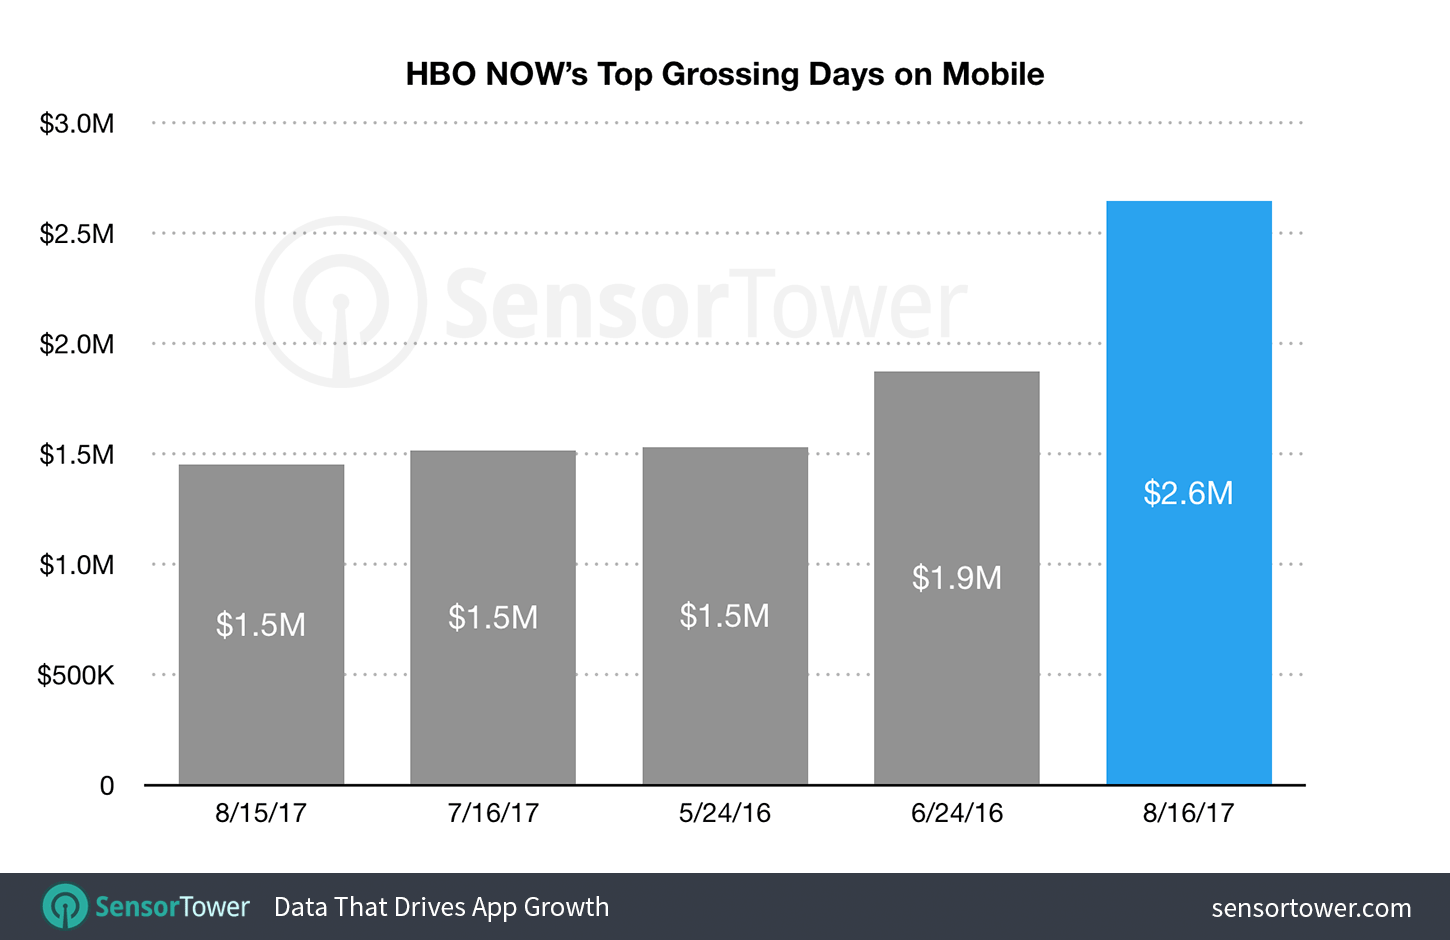 HBO Now comparison of historic highest revenue days